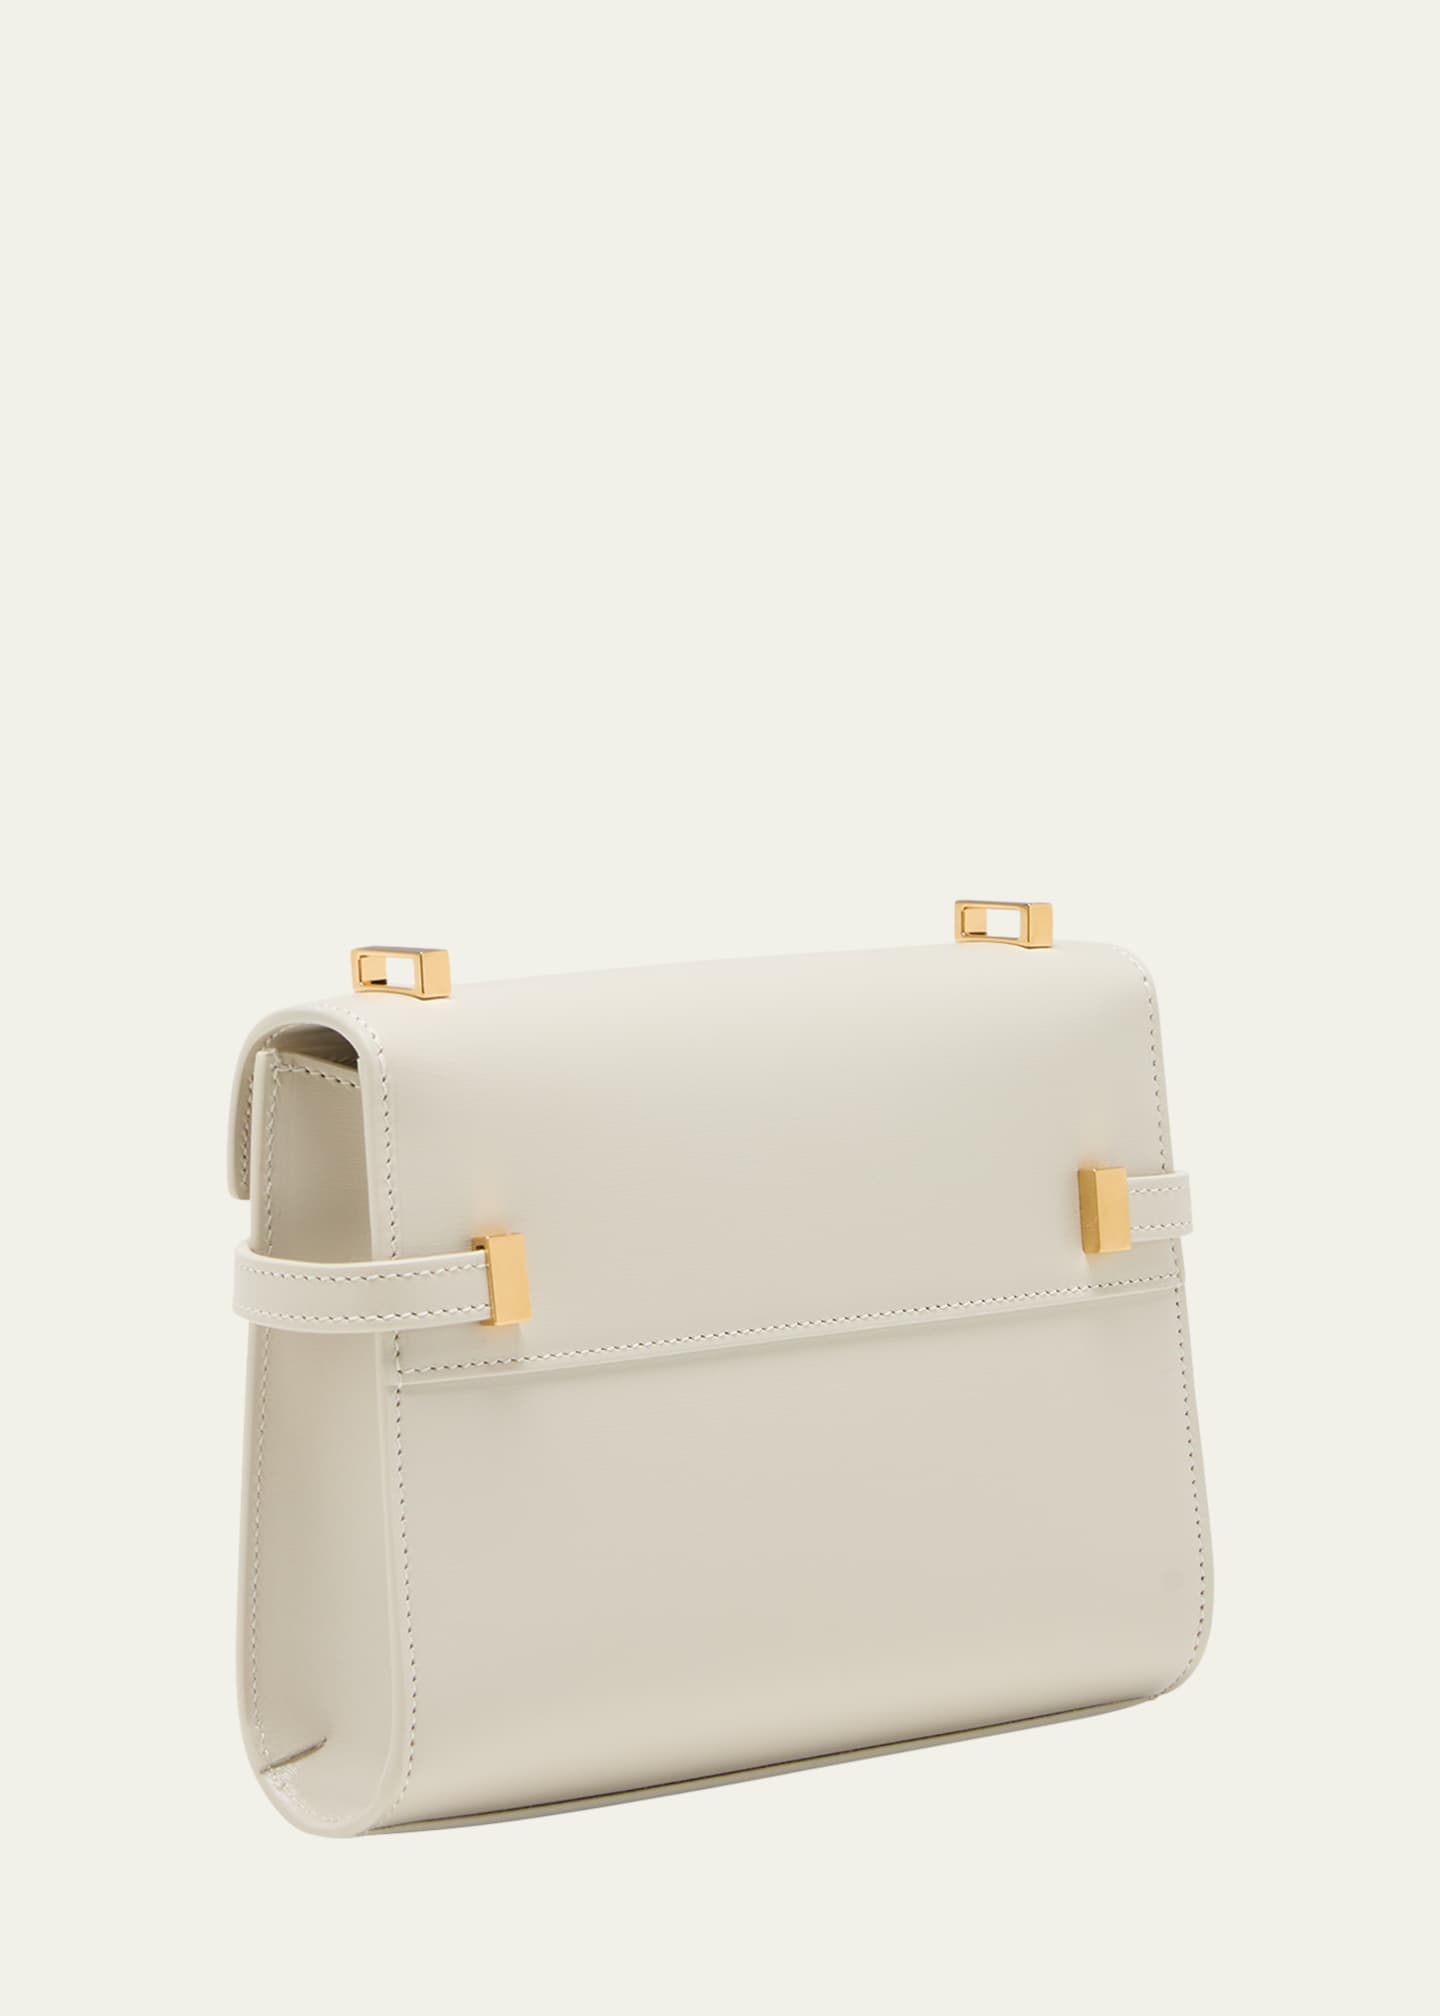 White Manhattan mini leather cross-body bag, Saint Laurent